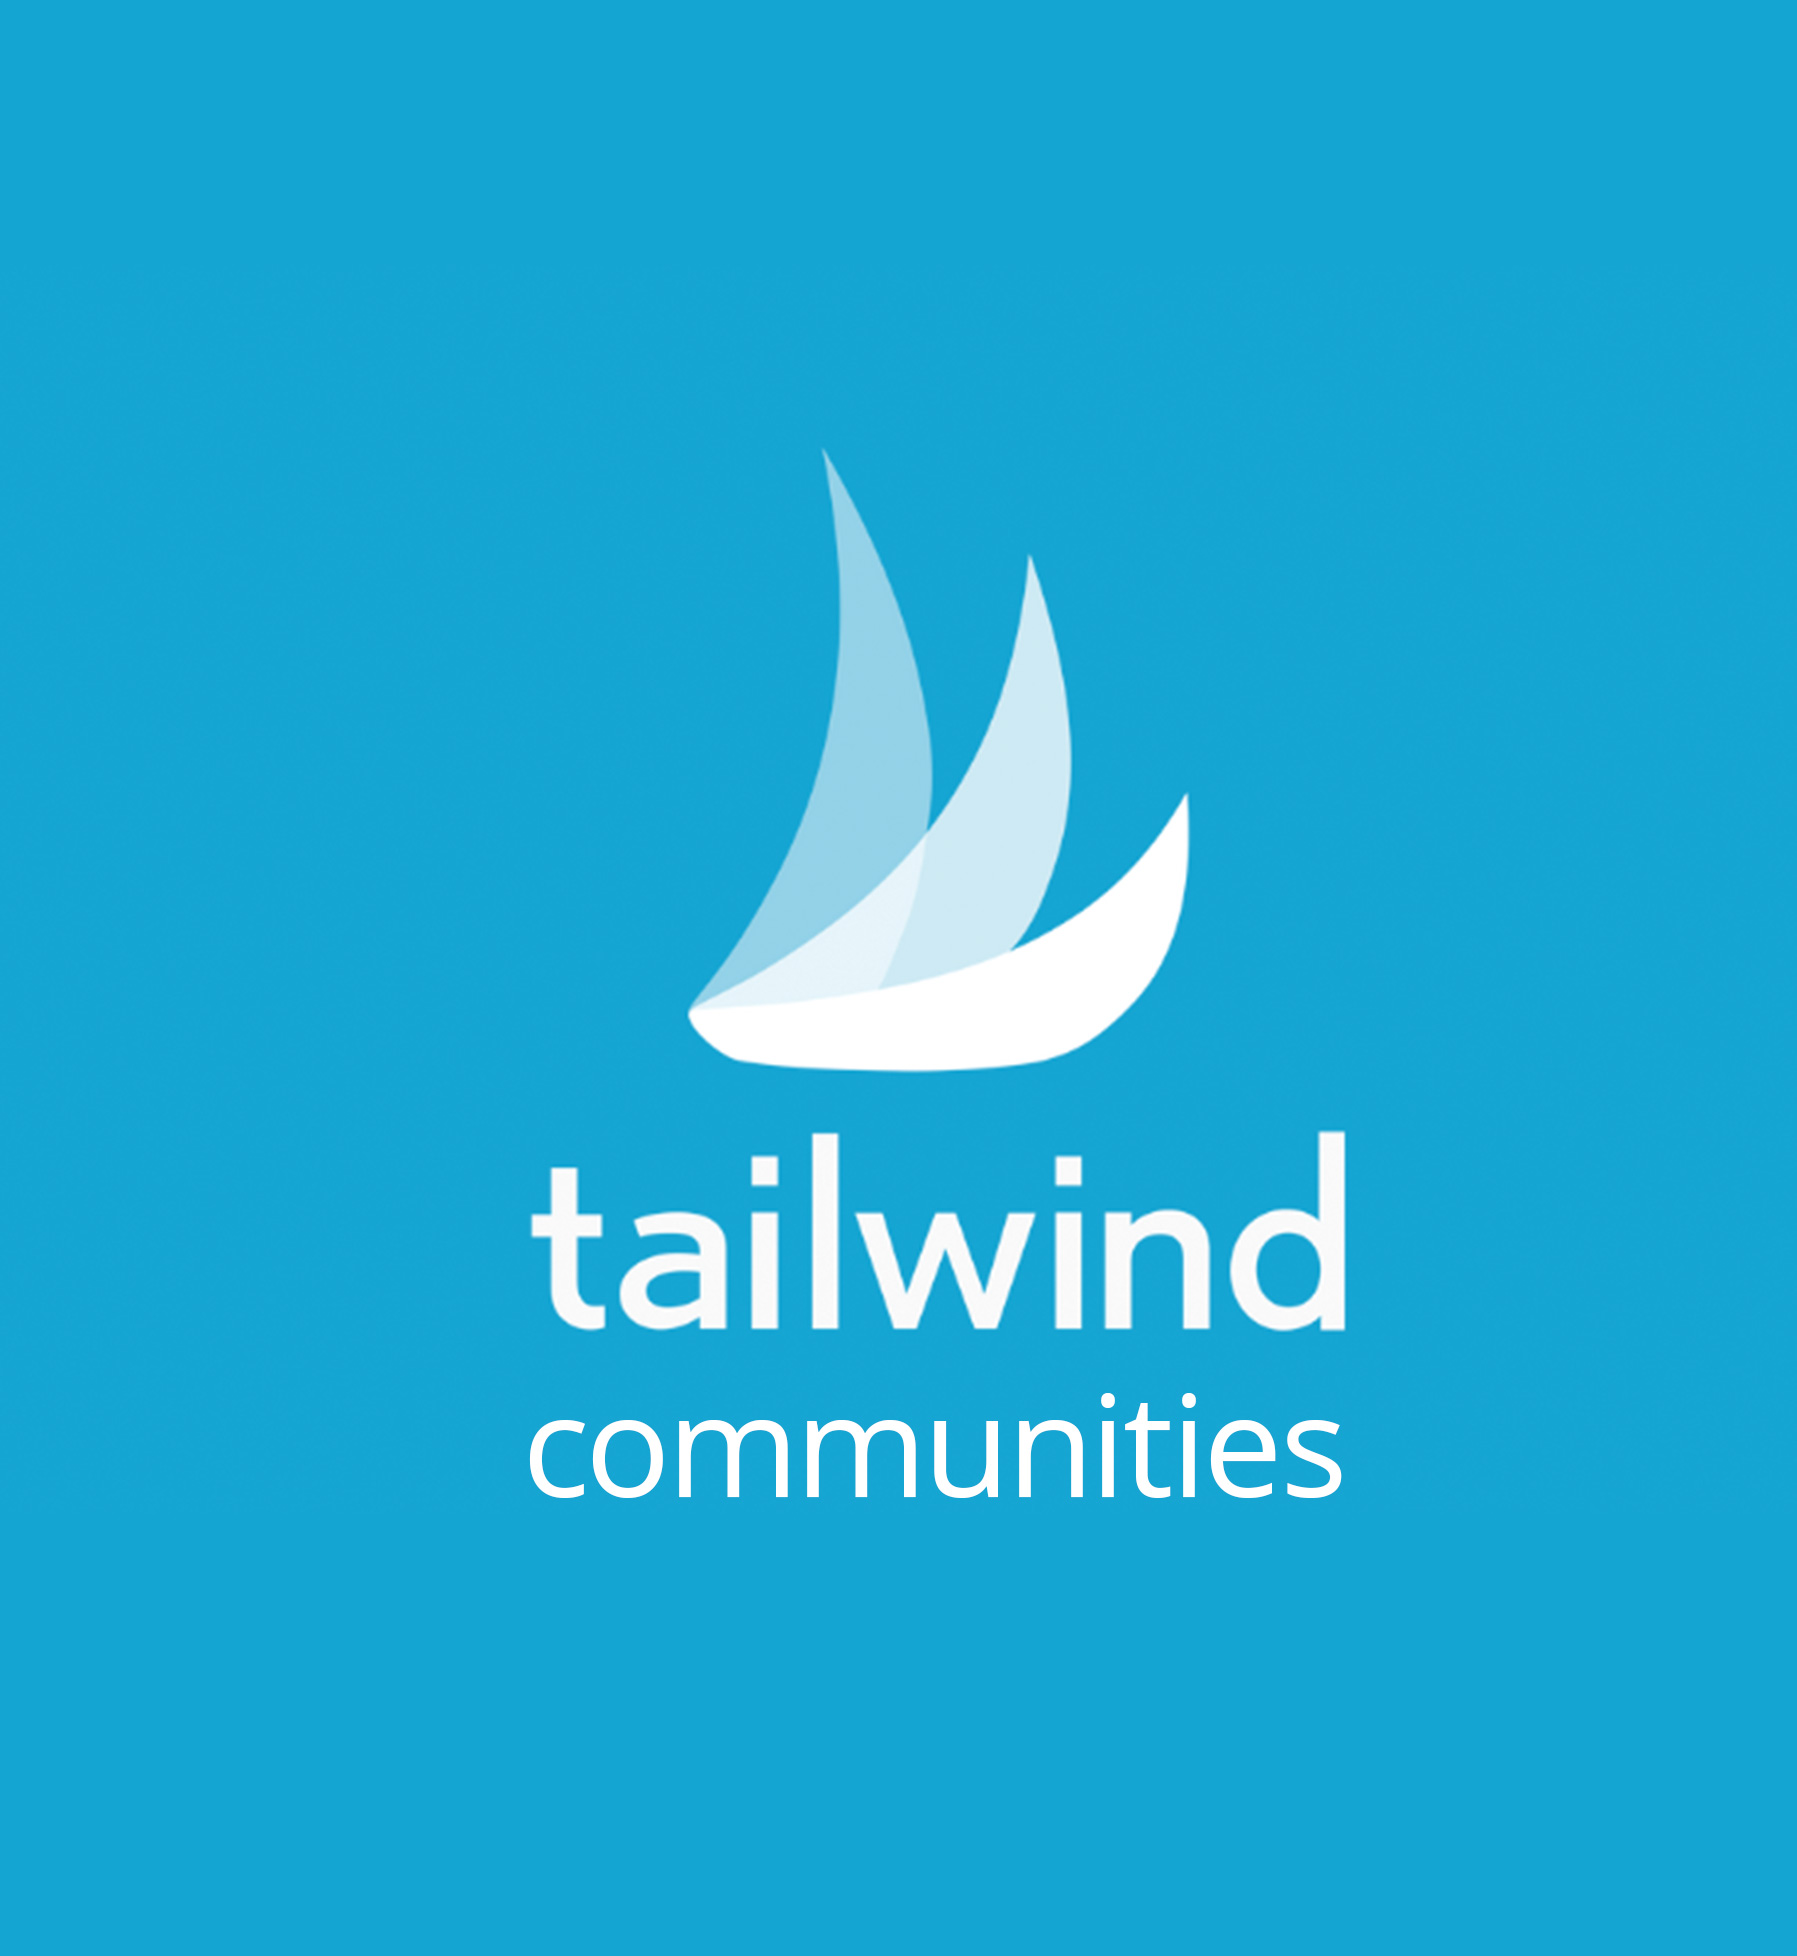 Tailwind communities